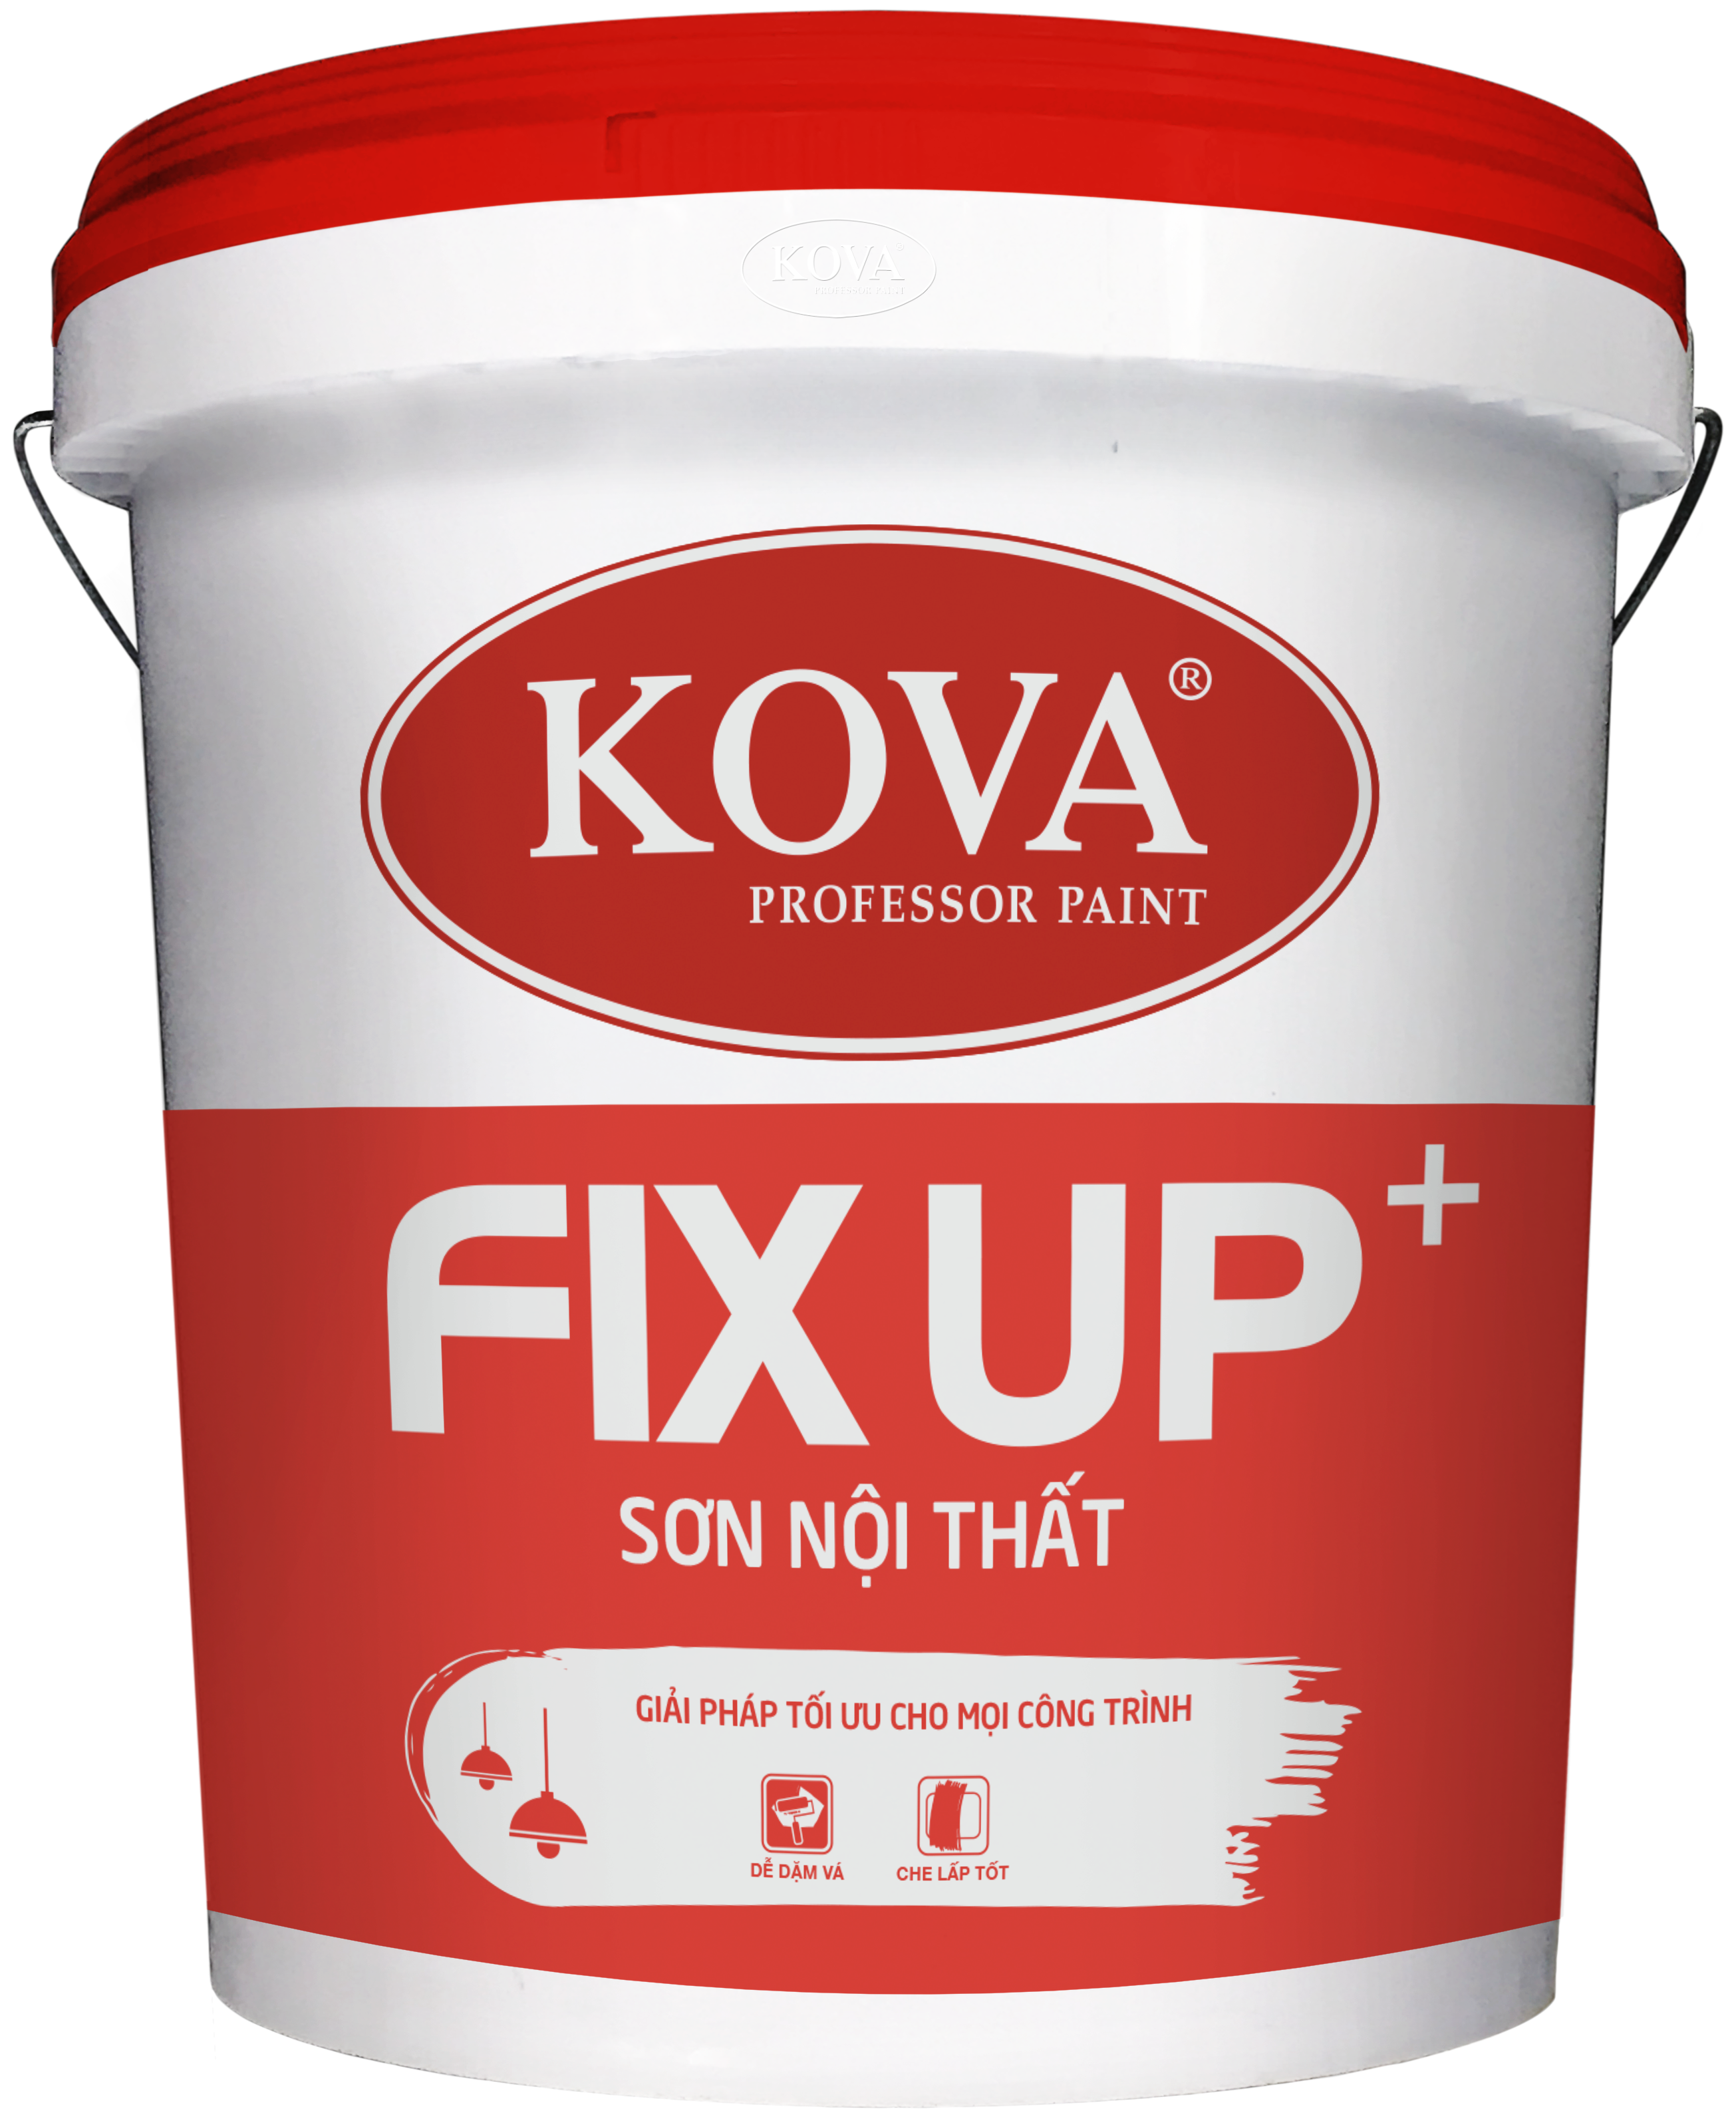 son-noi-that-kova-fix-up